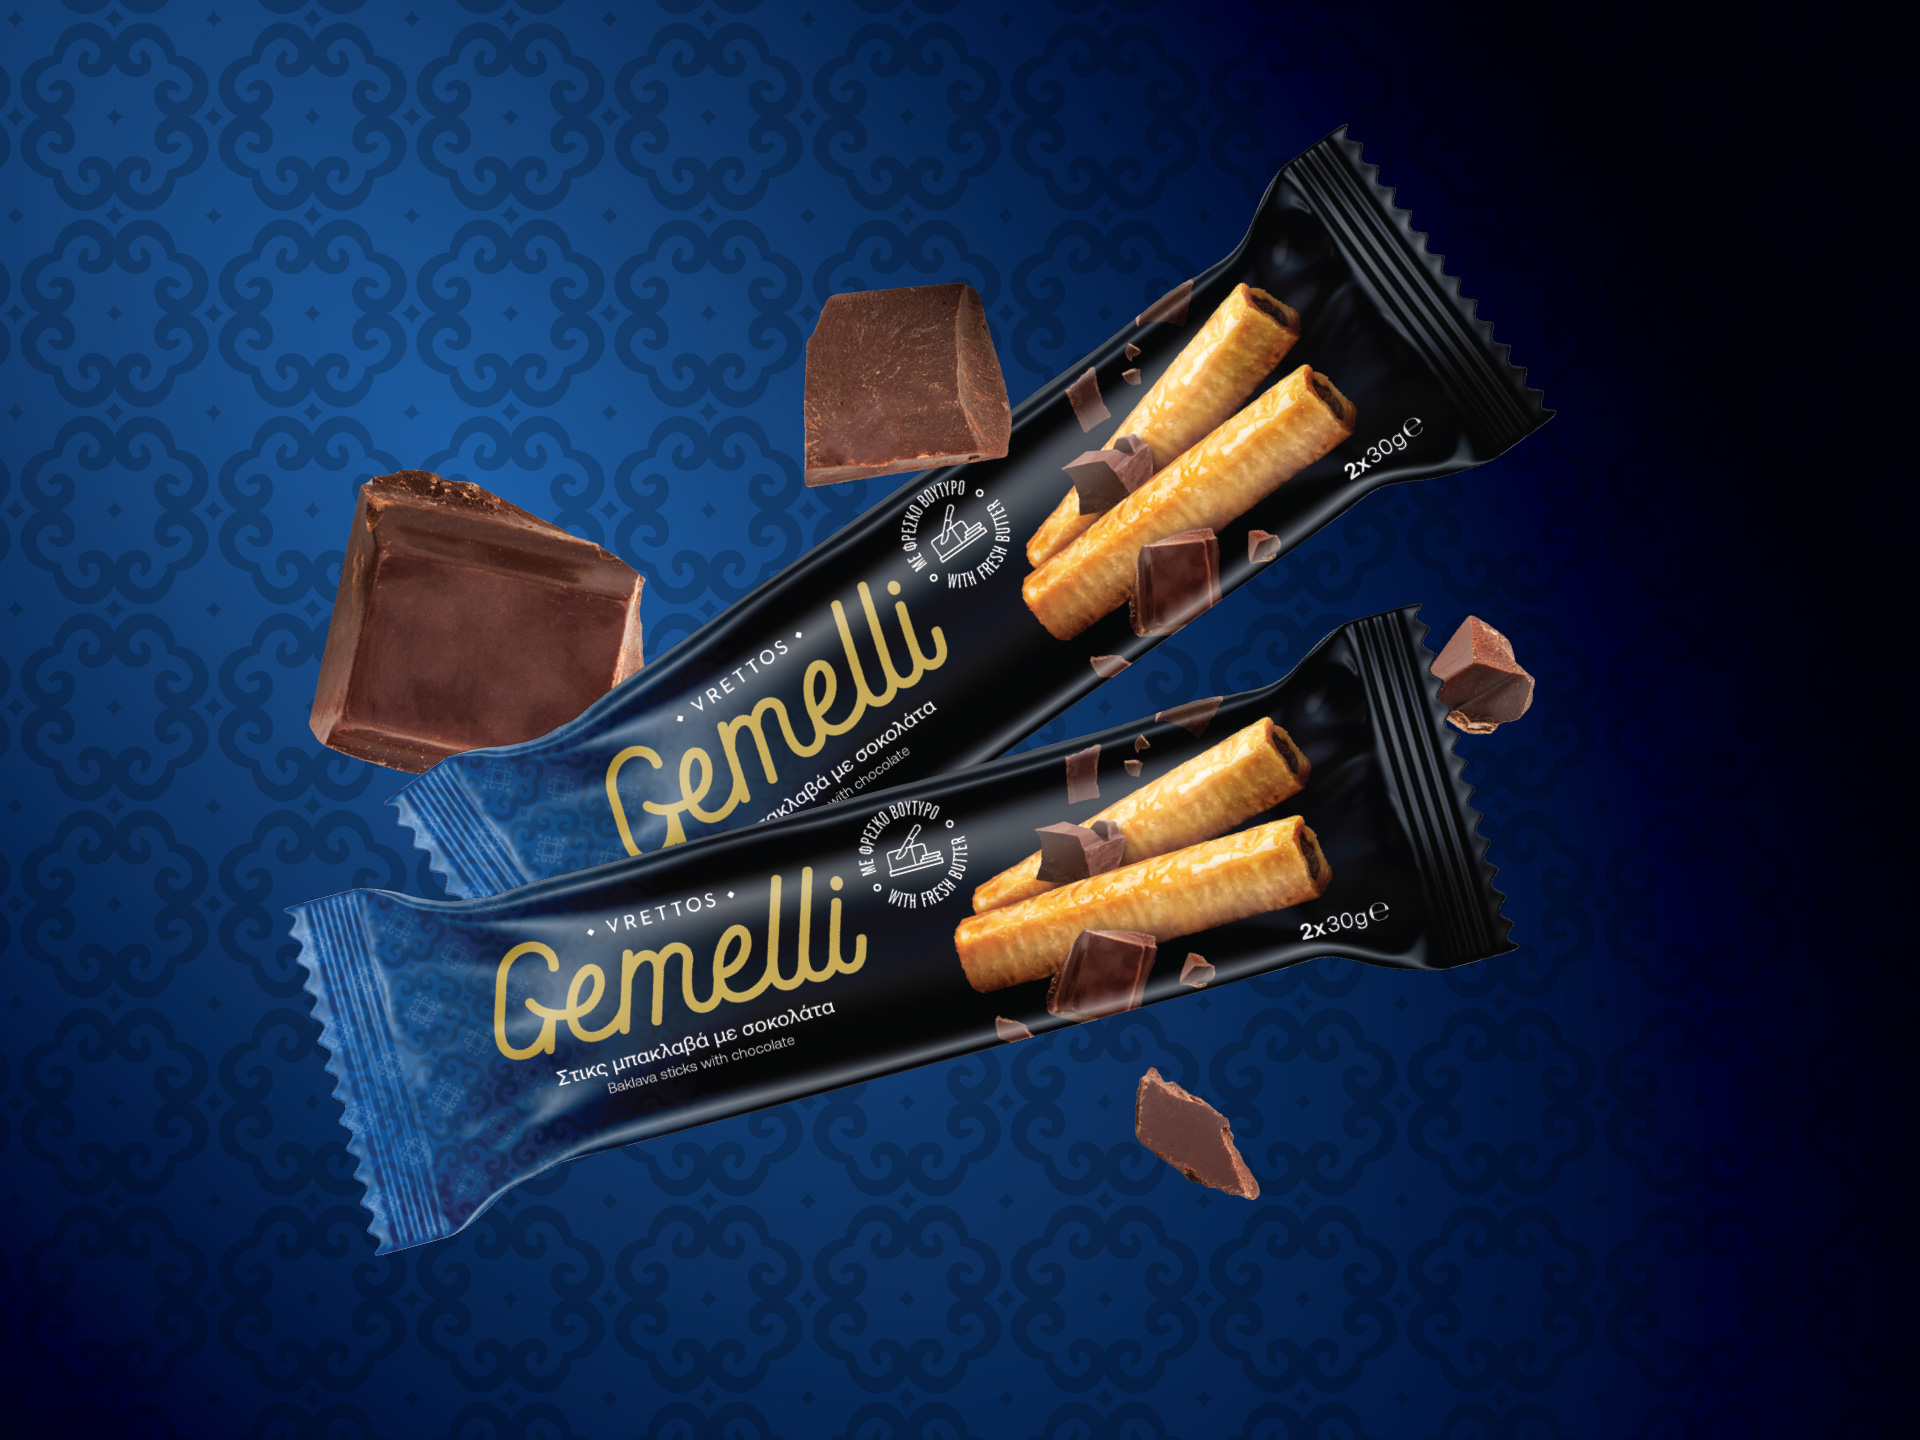 Gemelli: Offering new taste delights!